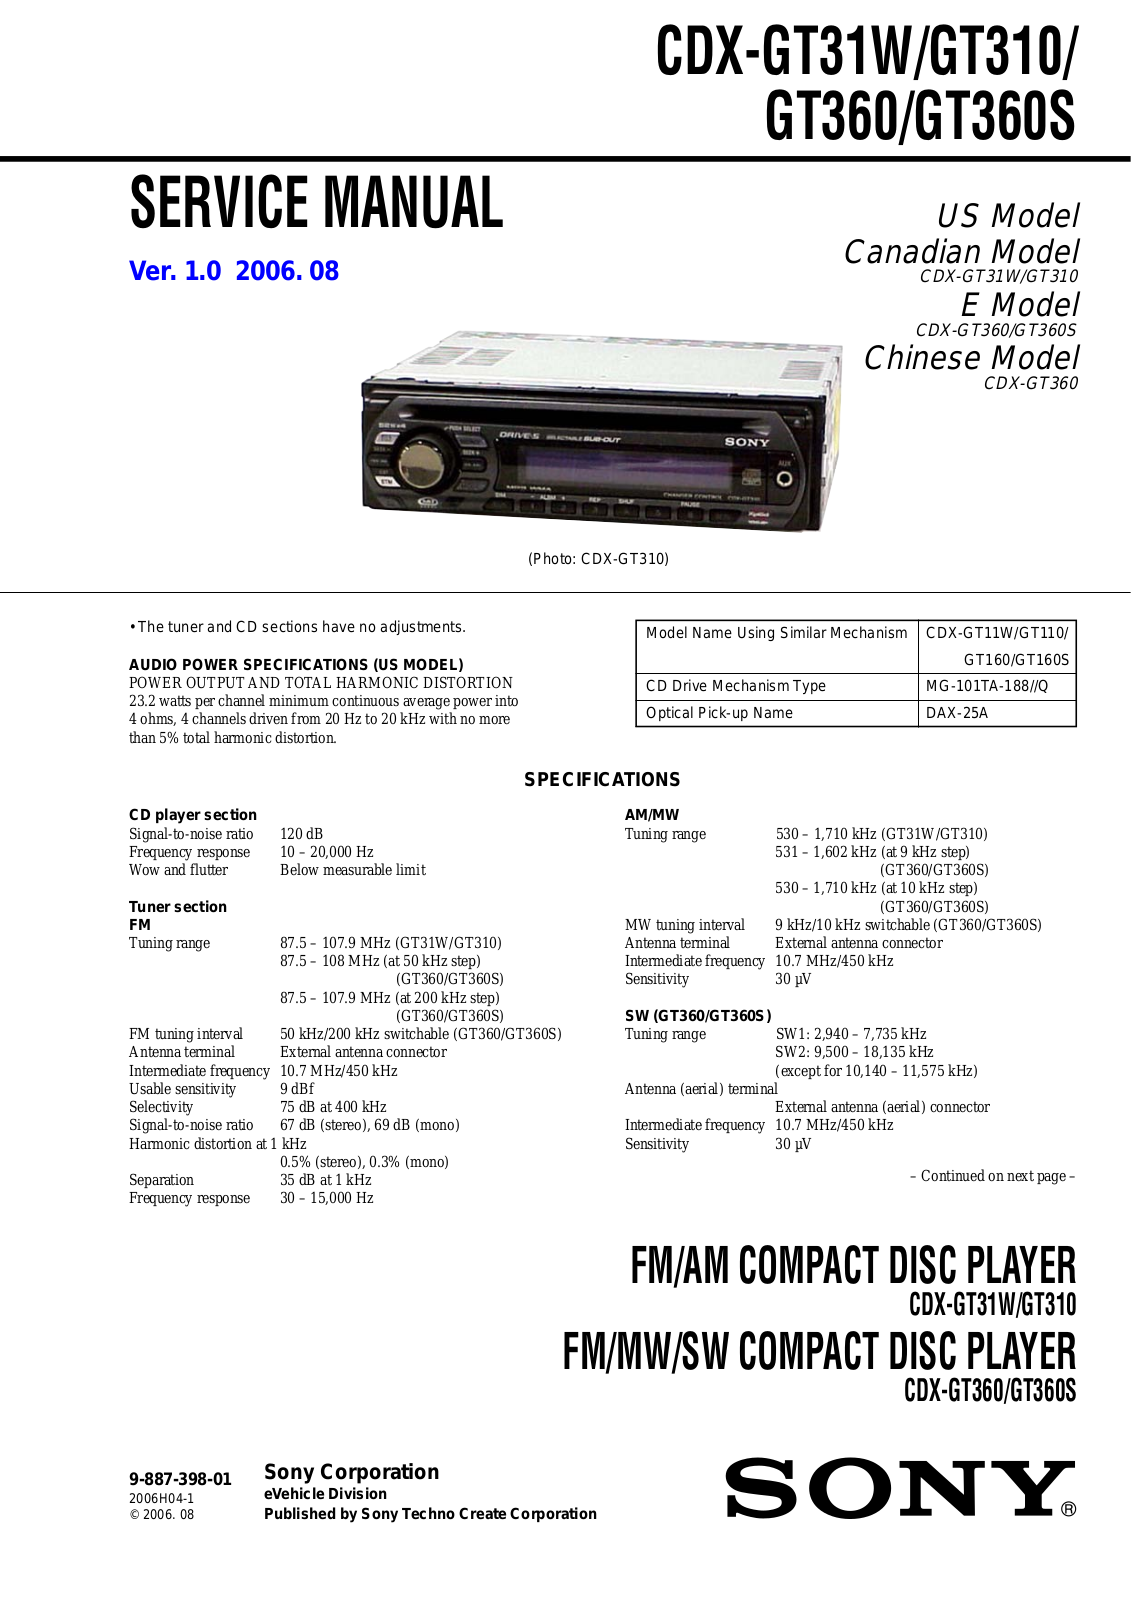 Sony CDX-GT31W, CDX-GT310, CDX-GT360, CDX-GT360S Service Manual